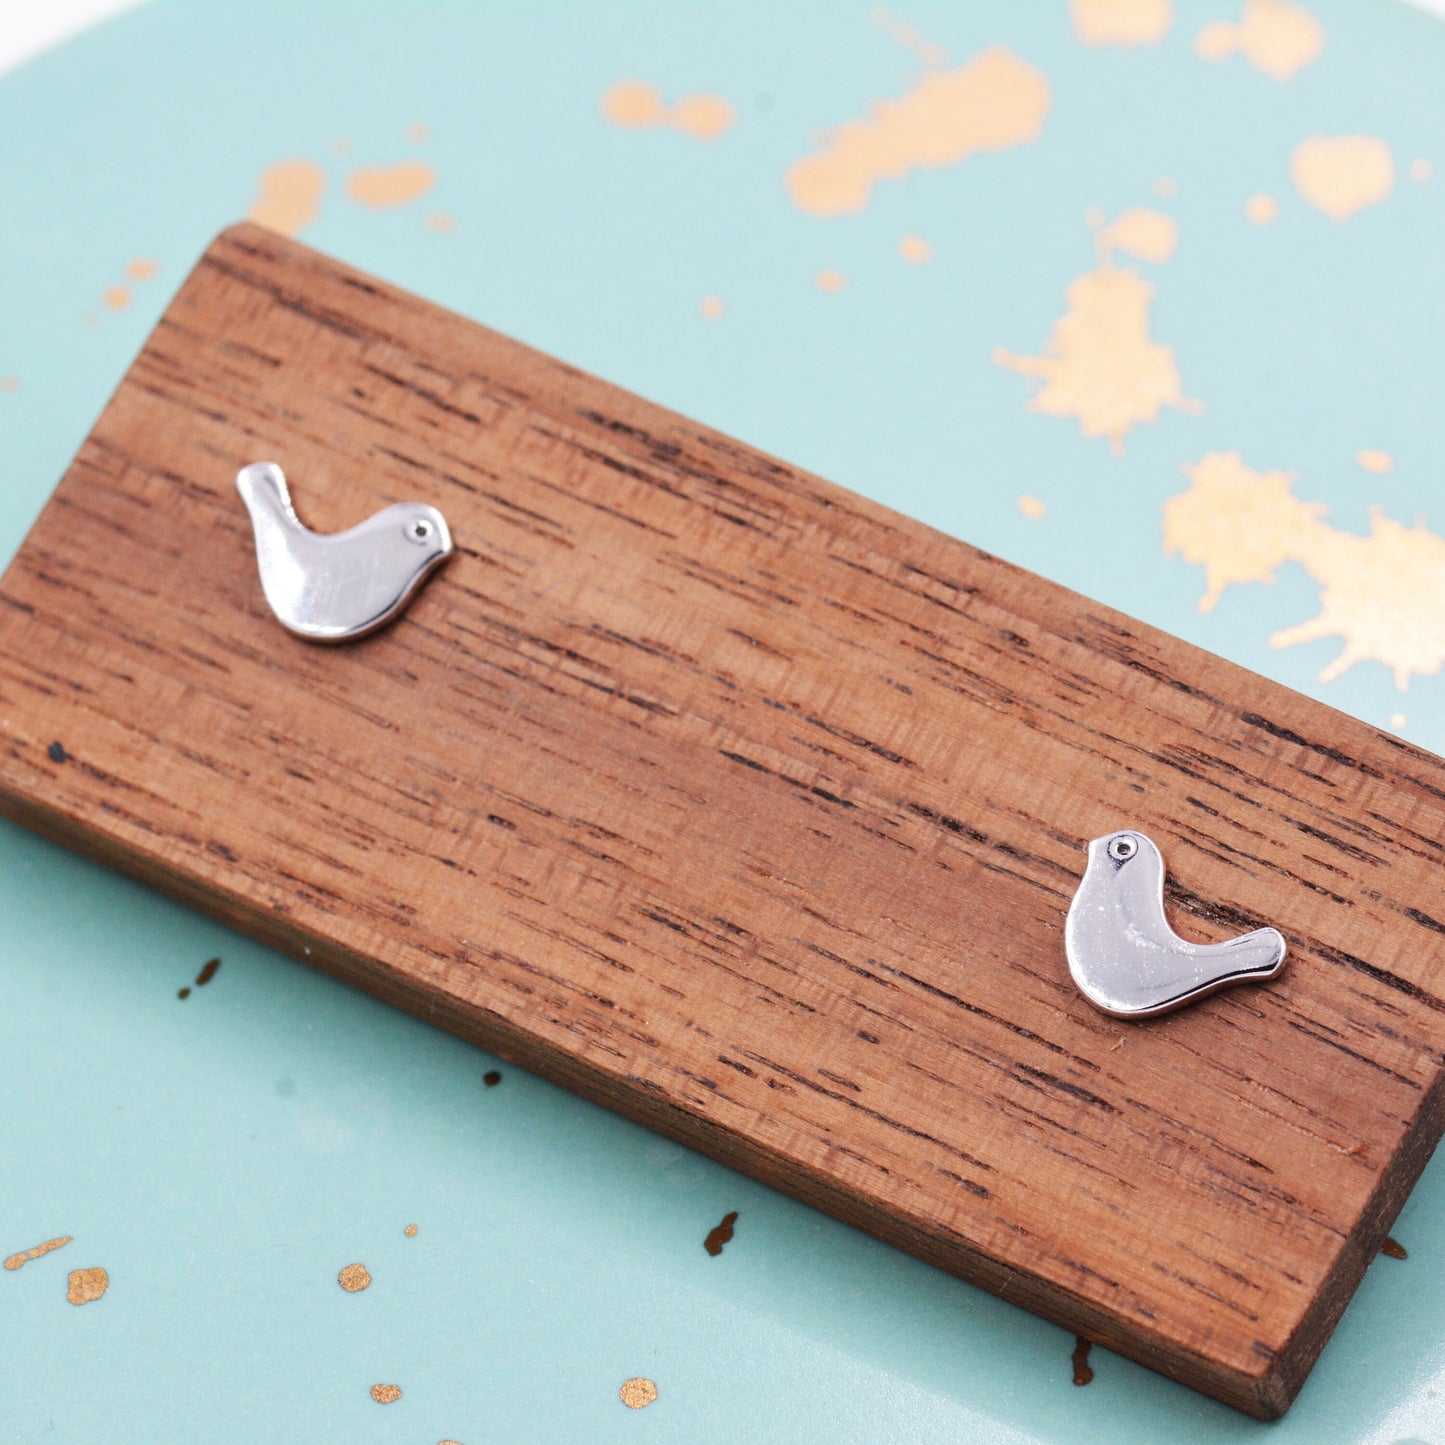 Little Dove Bird Stud Earrings in Sterling Silver, Cute Bird Stud, Fun and Quirky Stud Earrings